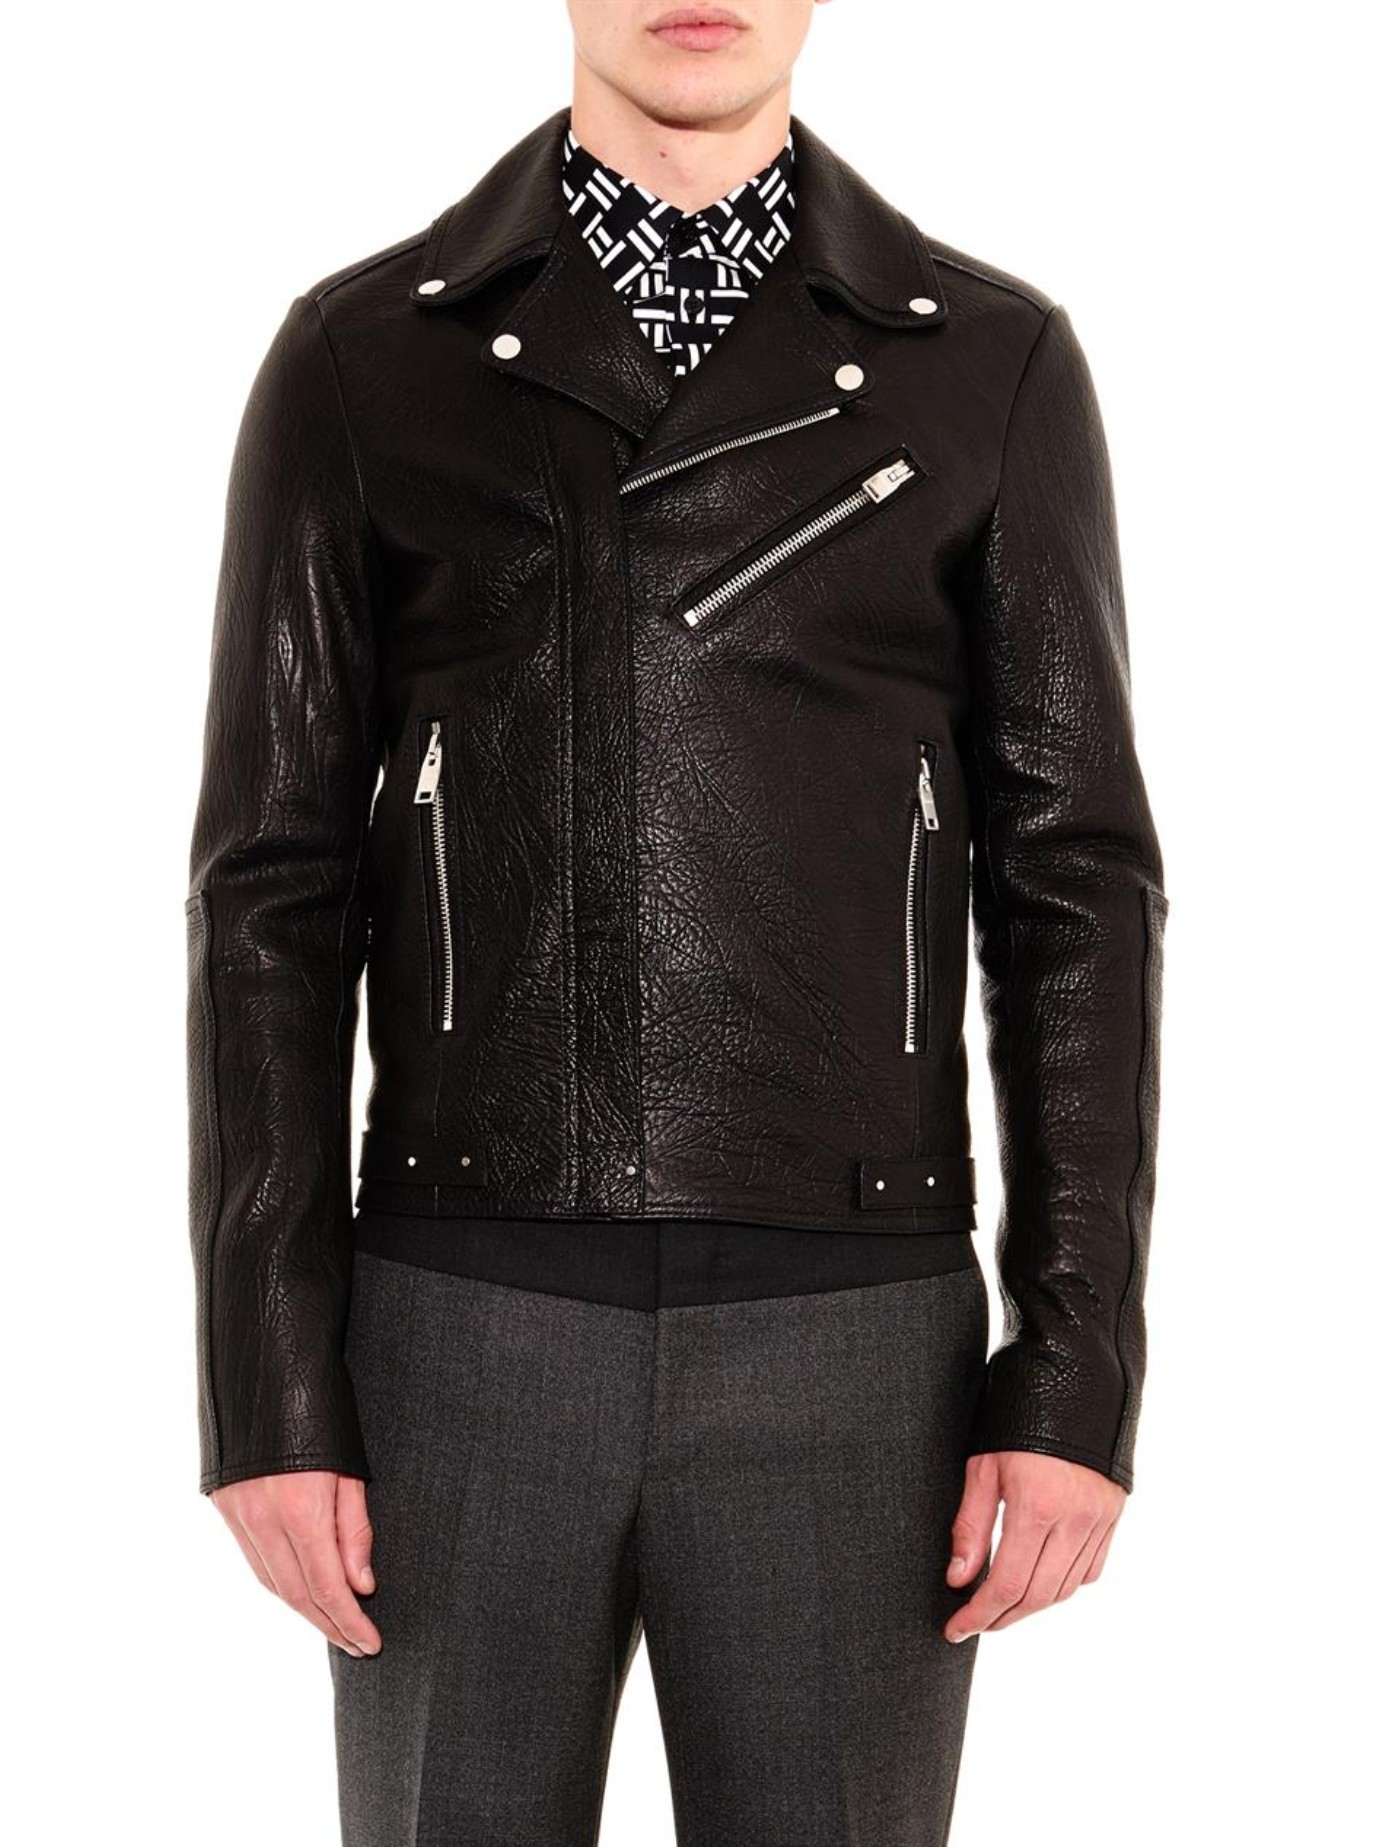 Balenciaga Grained-Leather Biker Jacket in Black for Men - Lyst